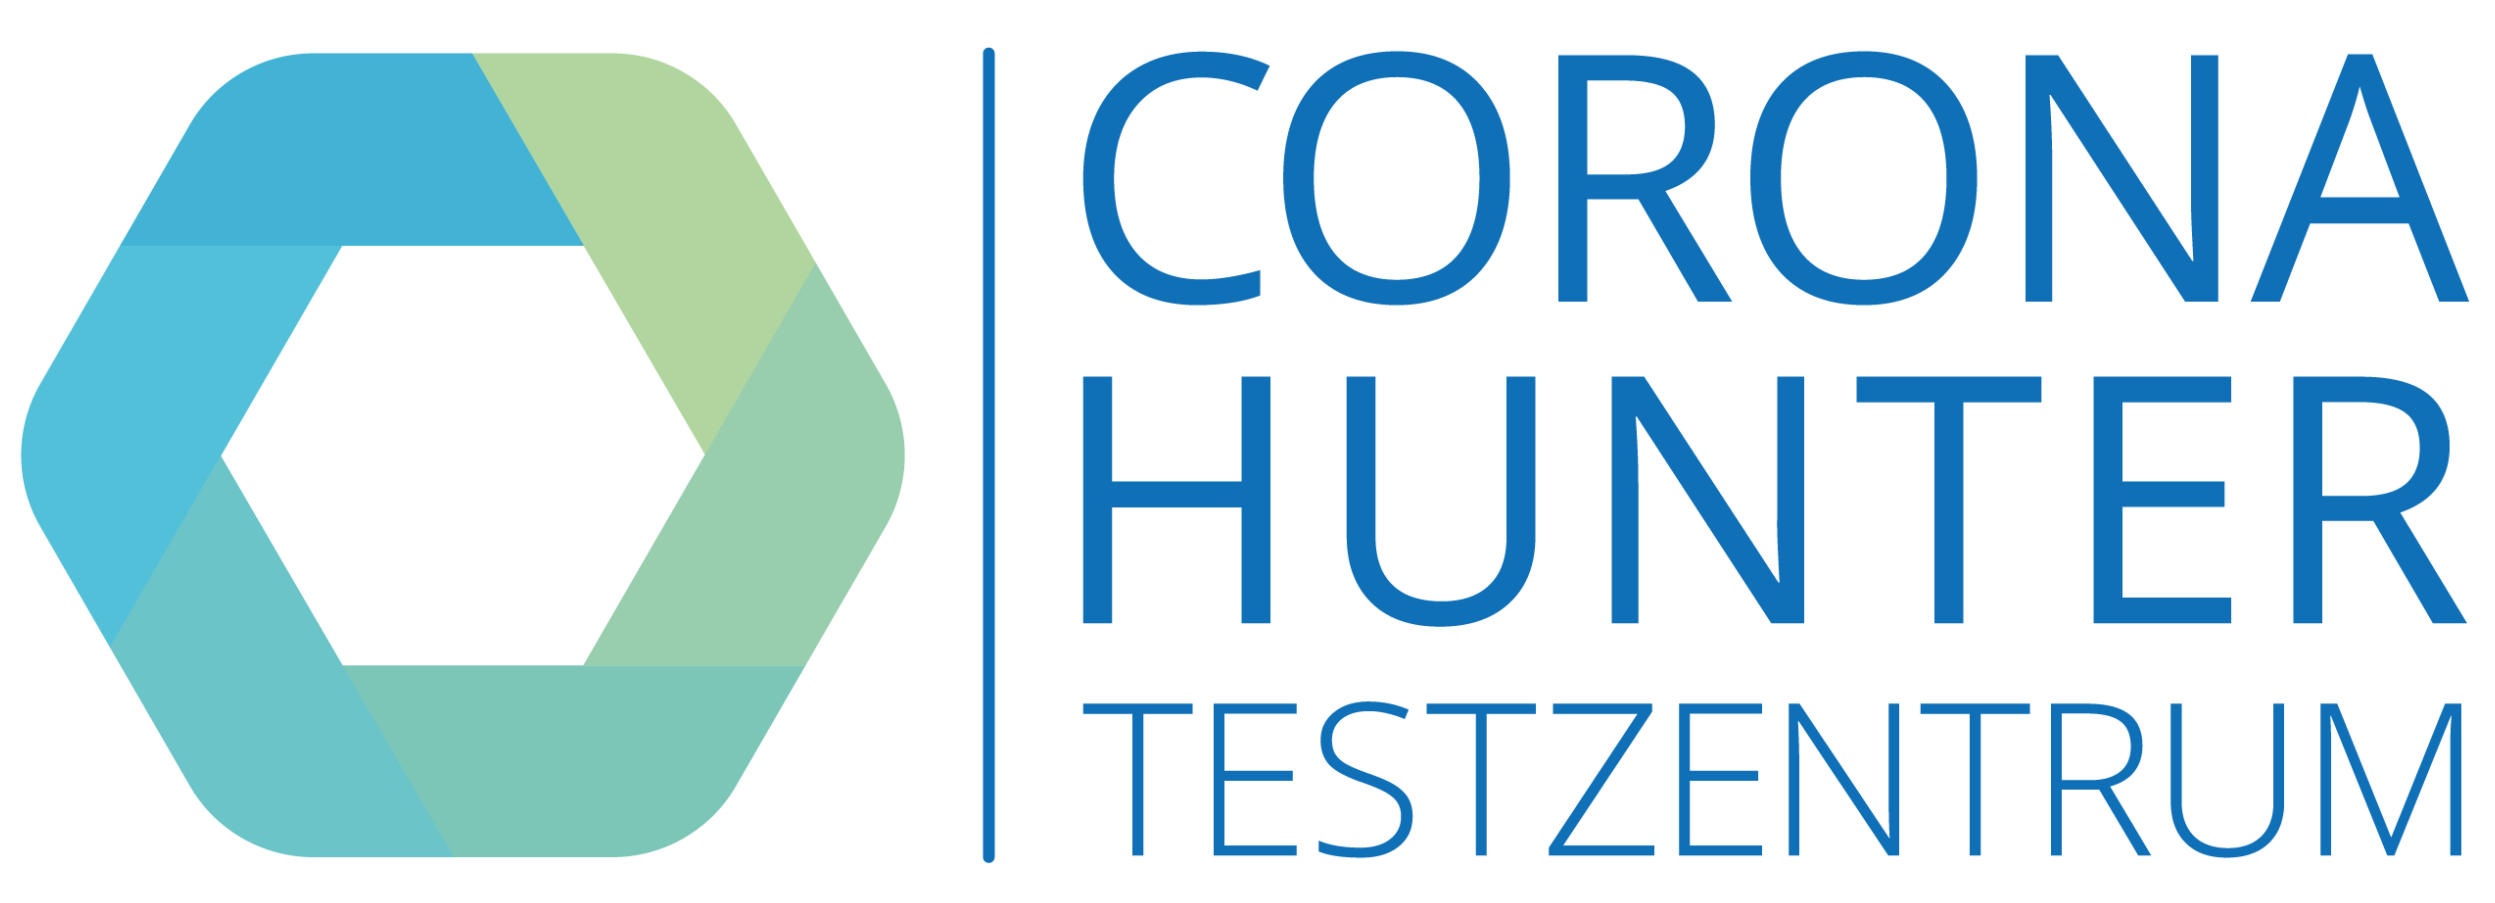 Corona Hunter Testzentrum Düsseldorf